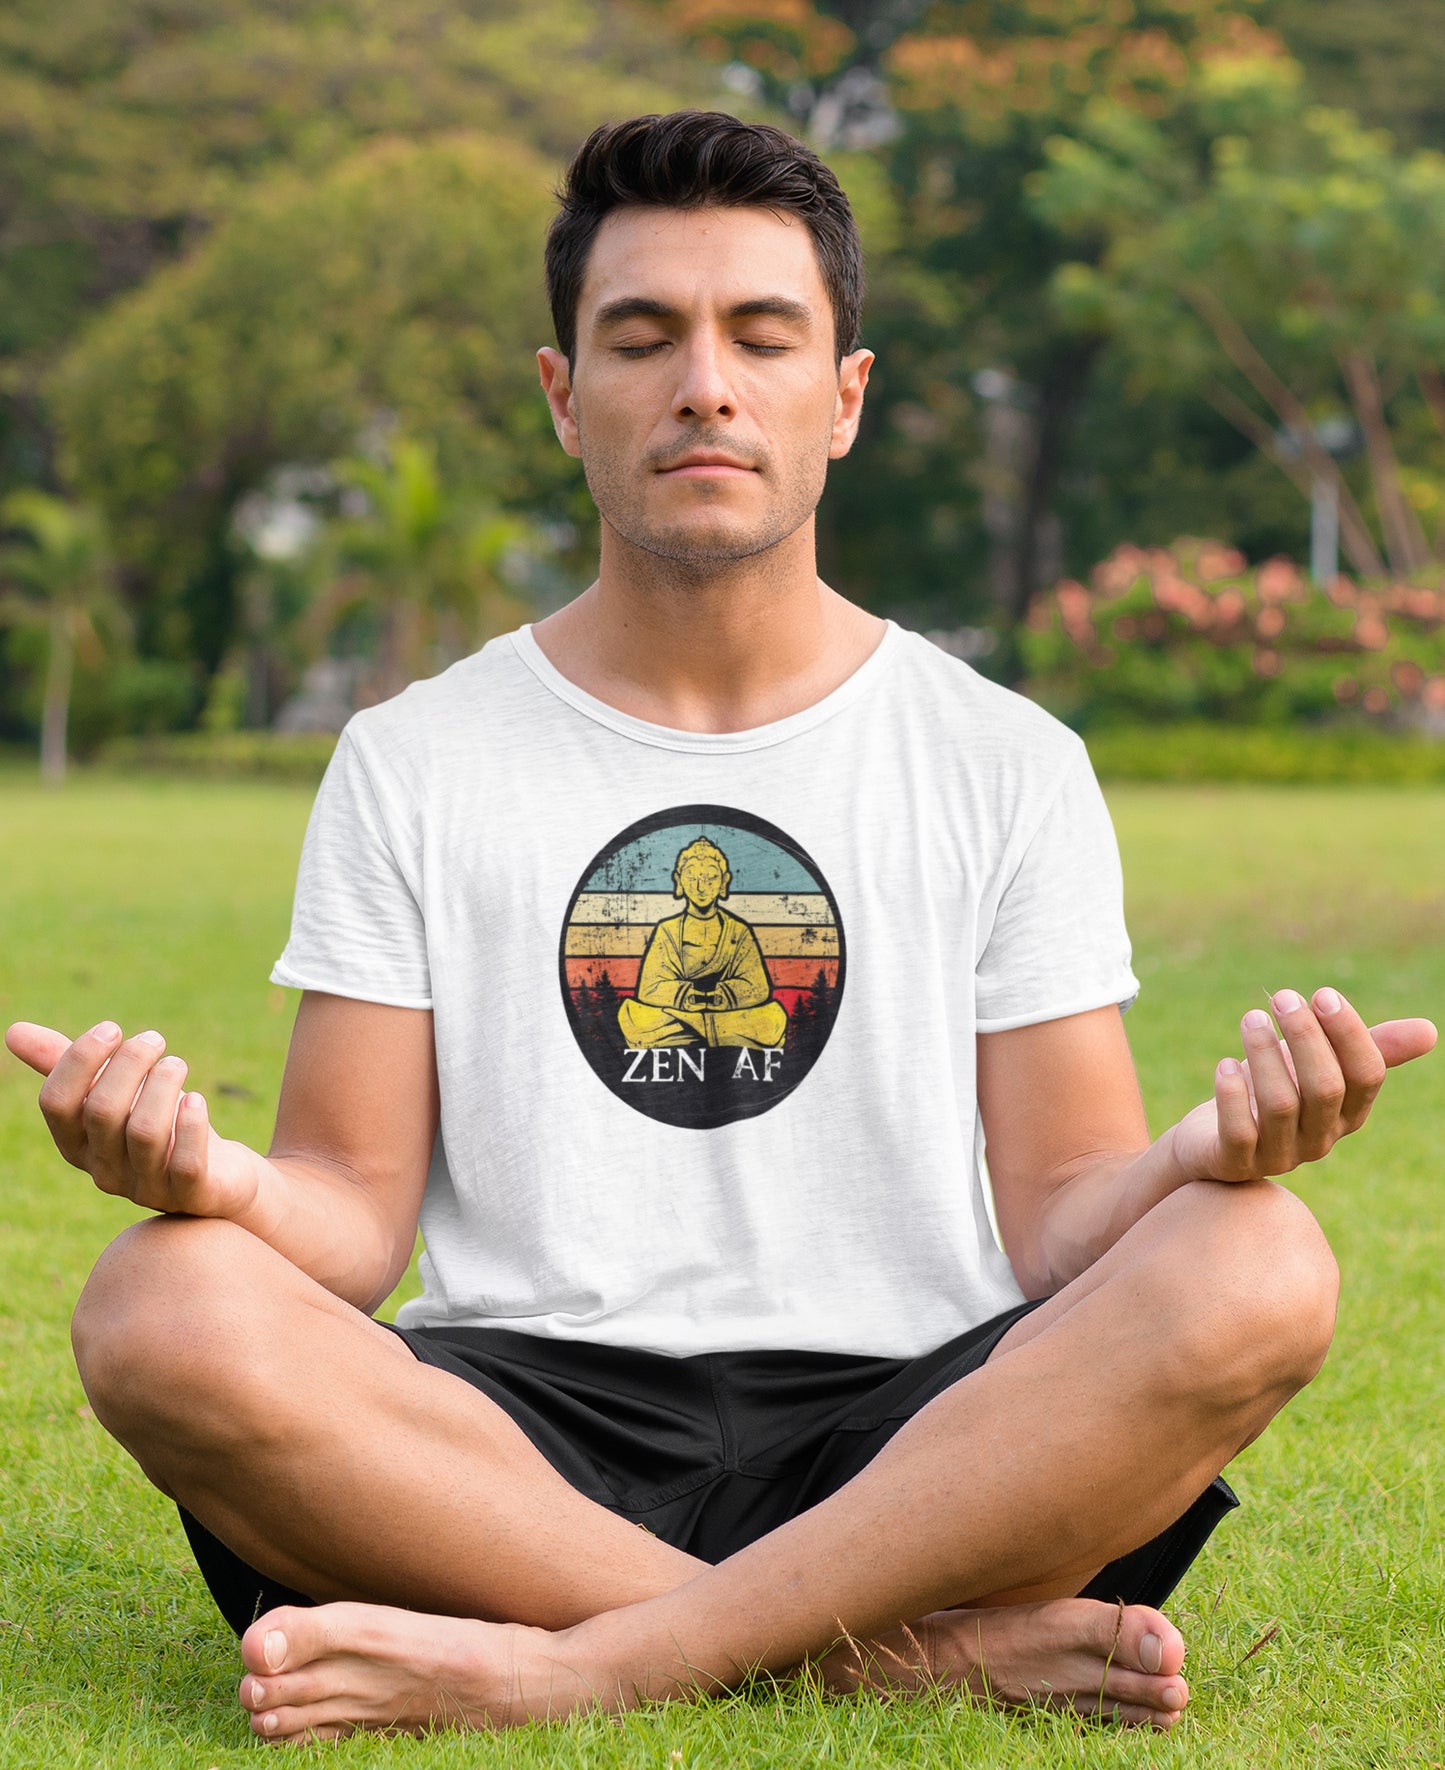 ZEN AF. Yoga T-shirt